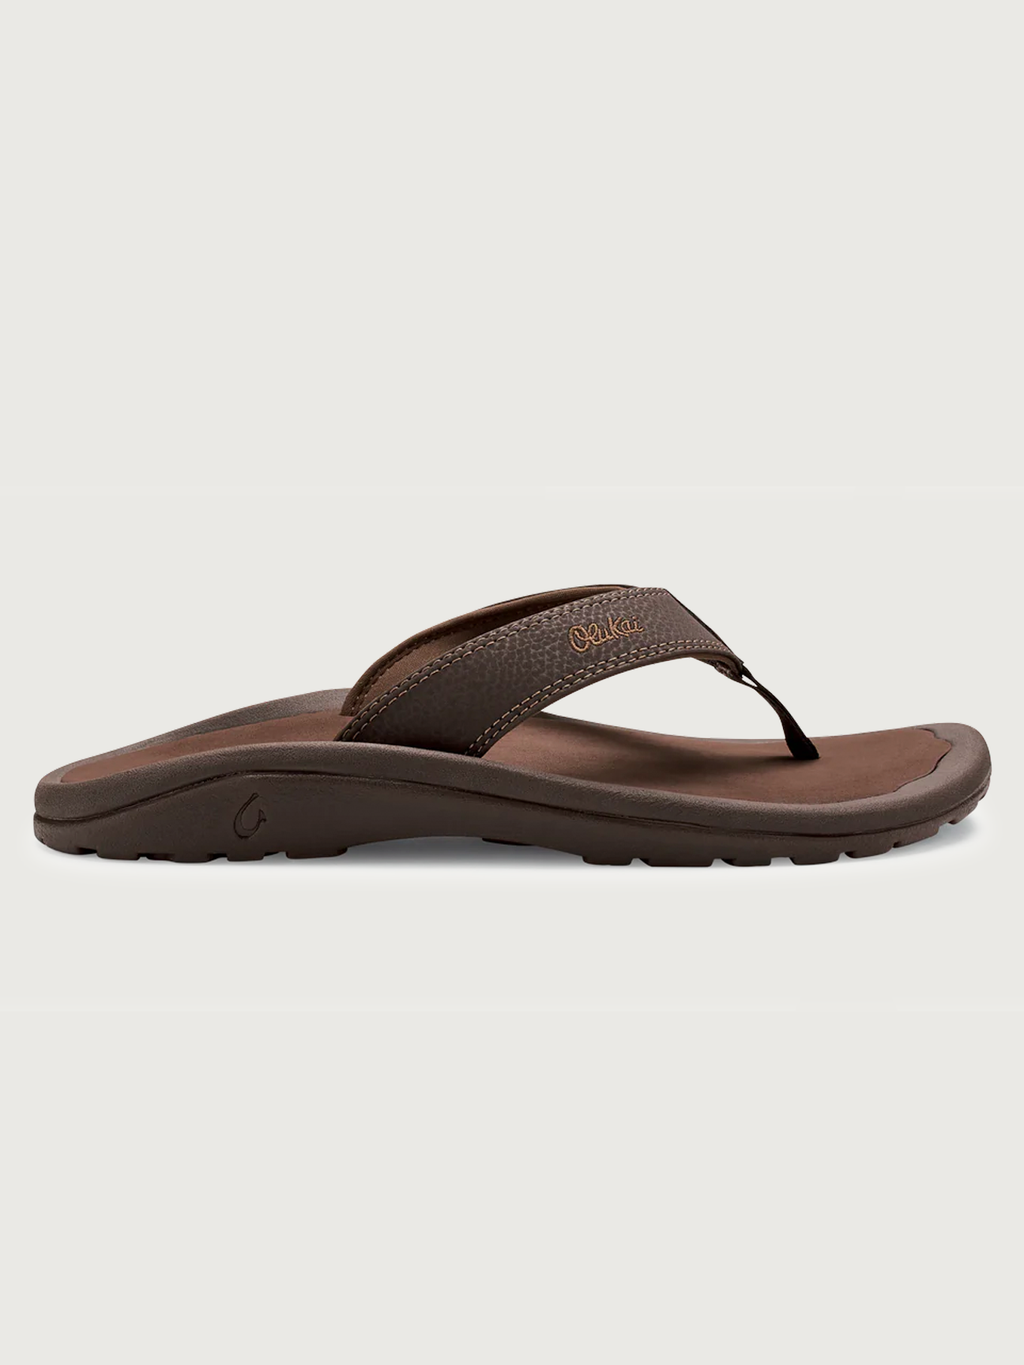 ‘Ohana Beach Sandal in Dark Java/Ray